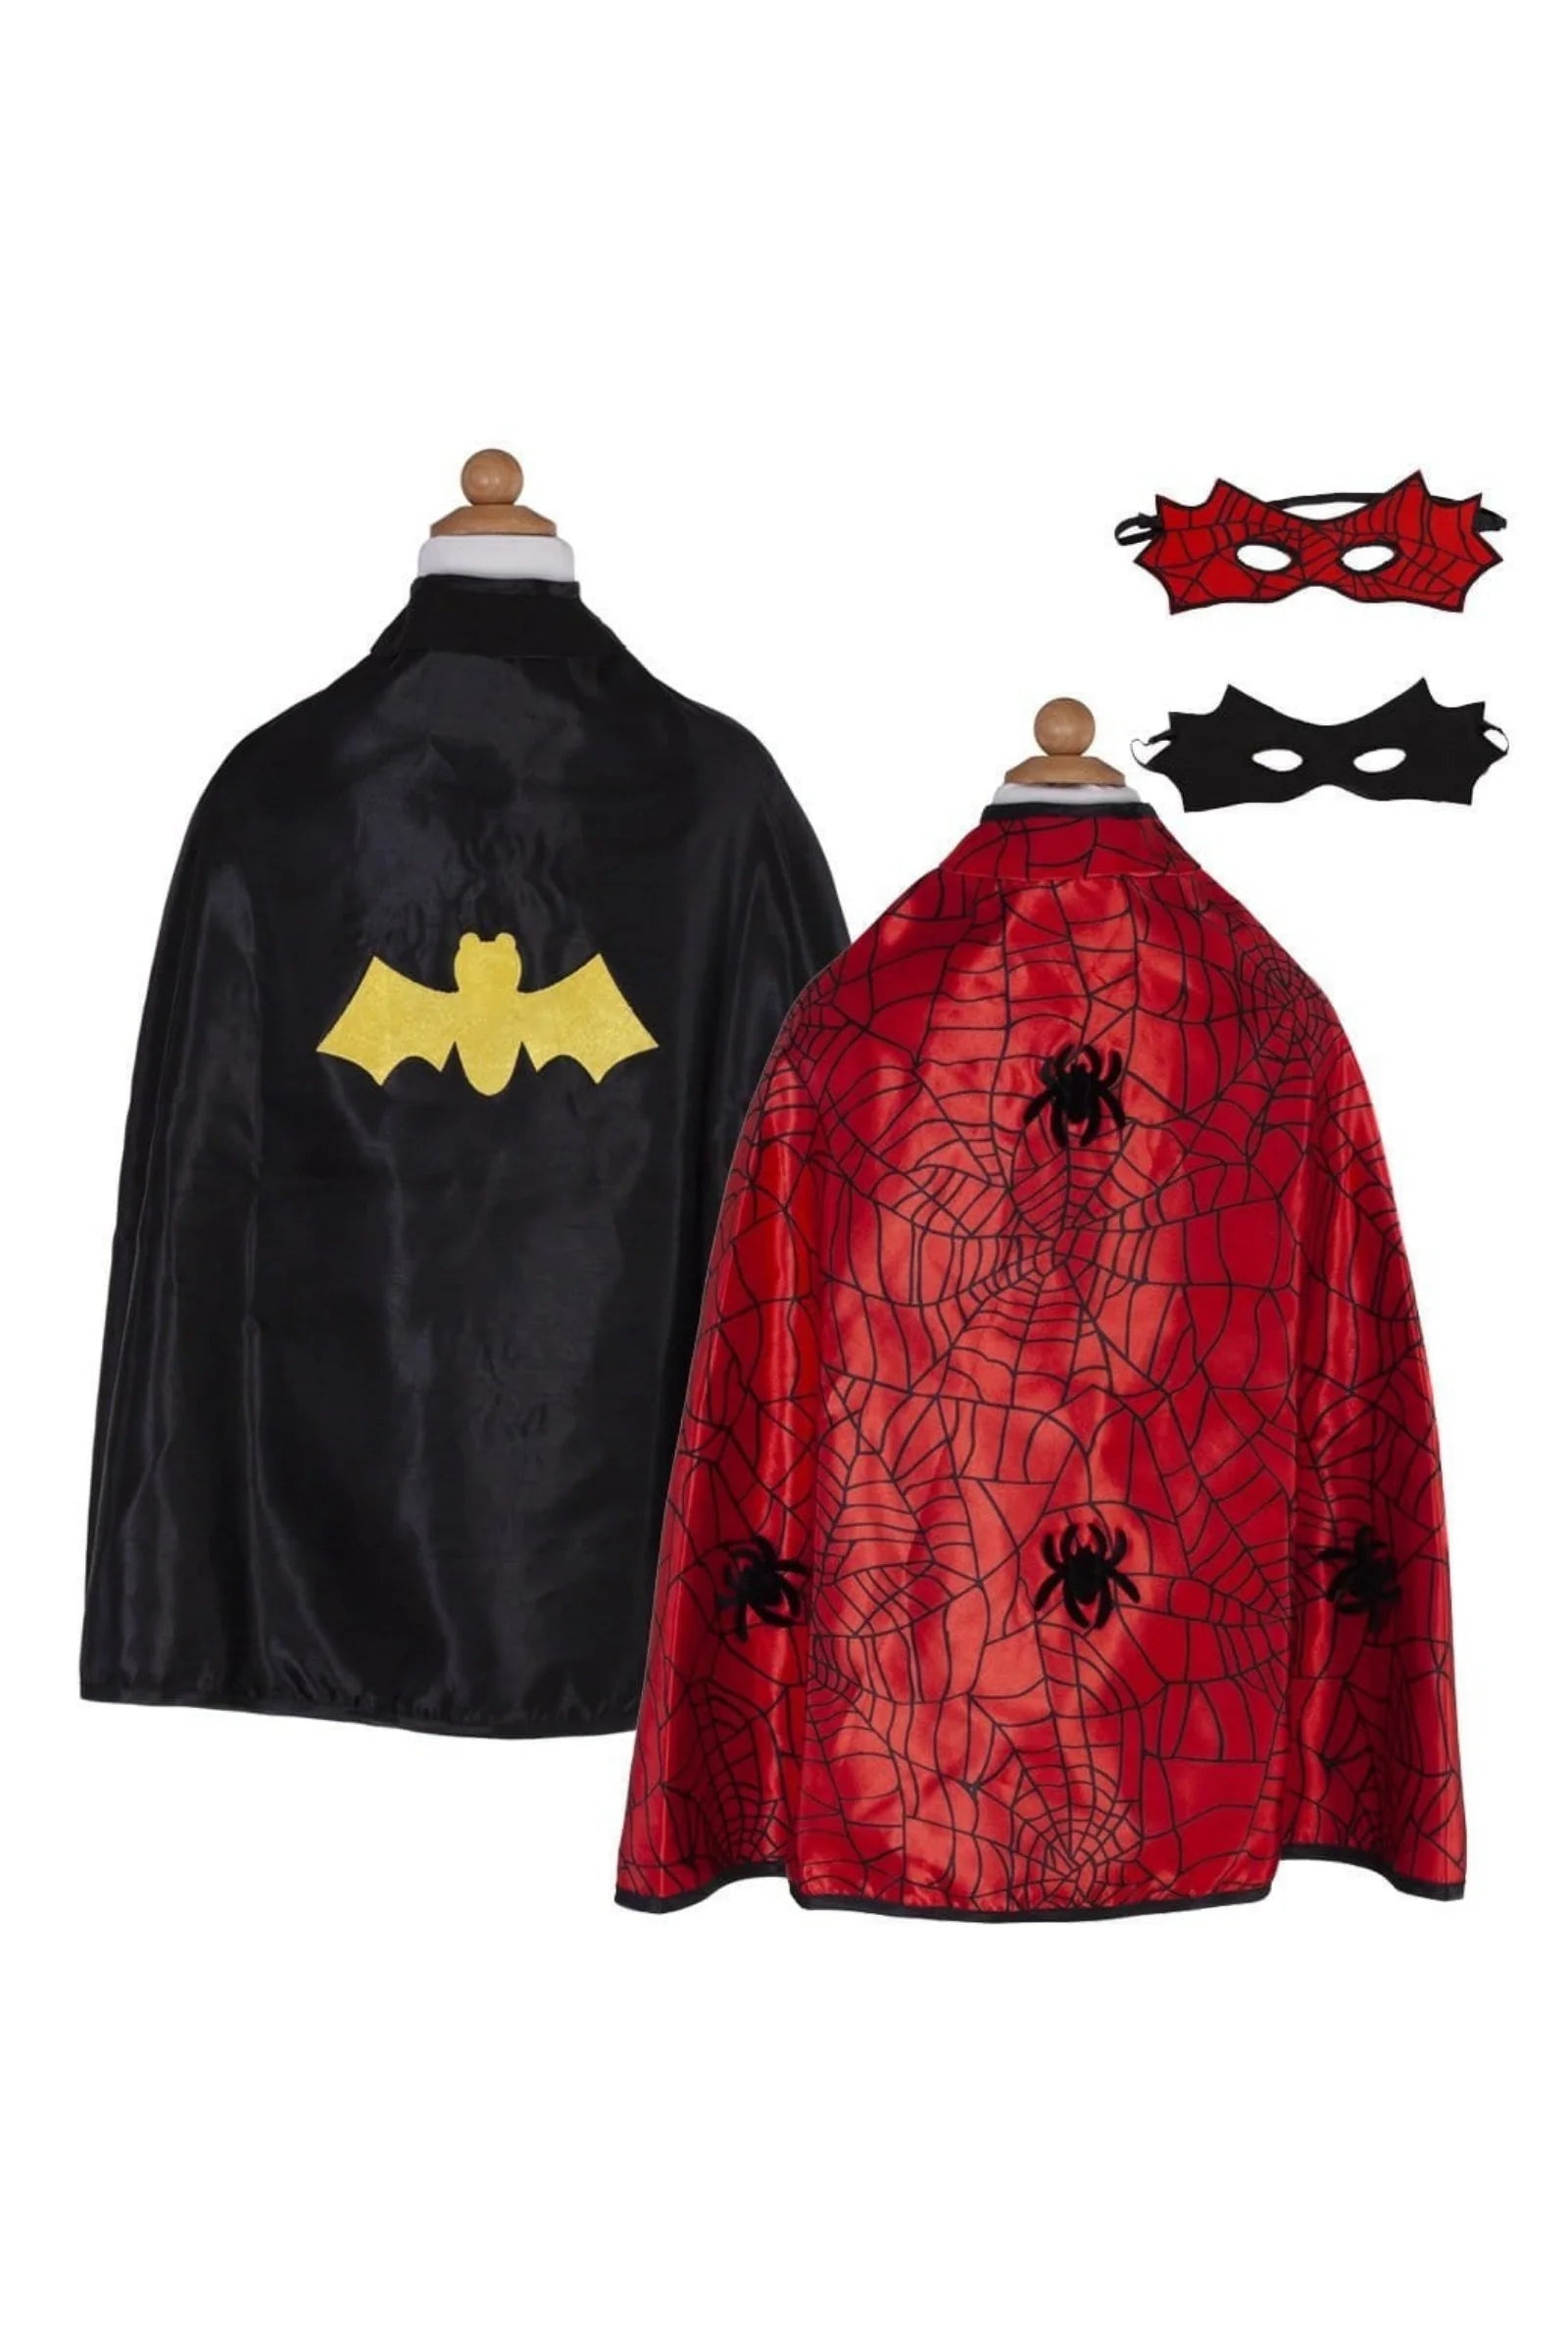 Wendbares Spiderman / Batman Kostüm - handgenäht in Kanada